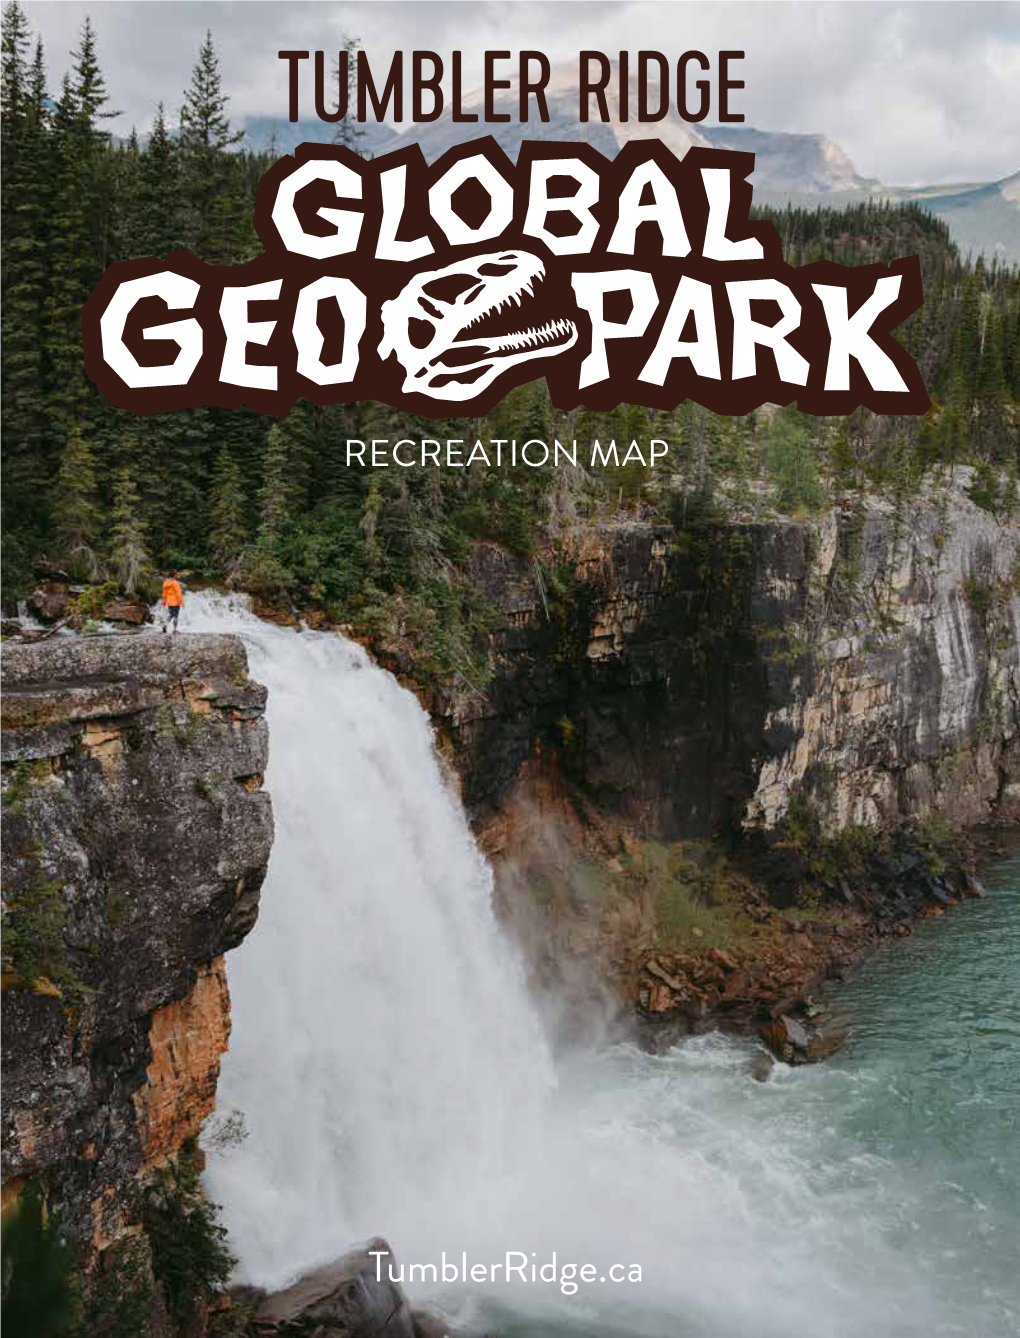 Tumbler Ridge Global Geopark Recreation